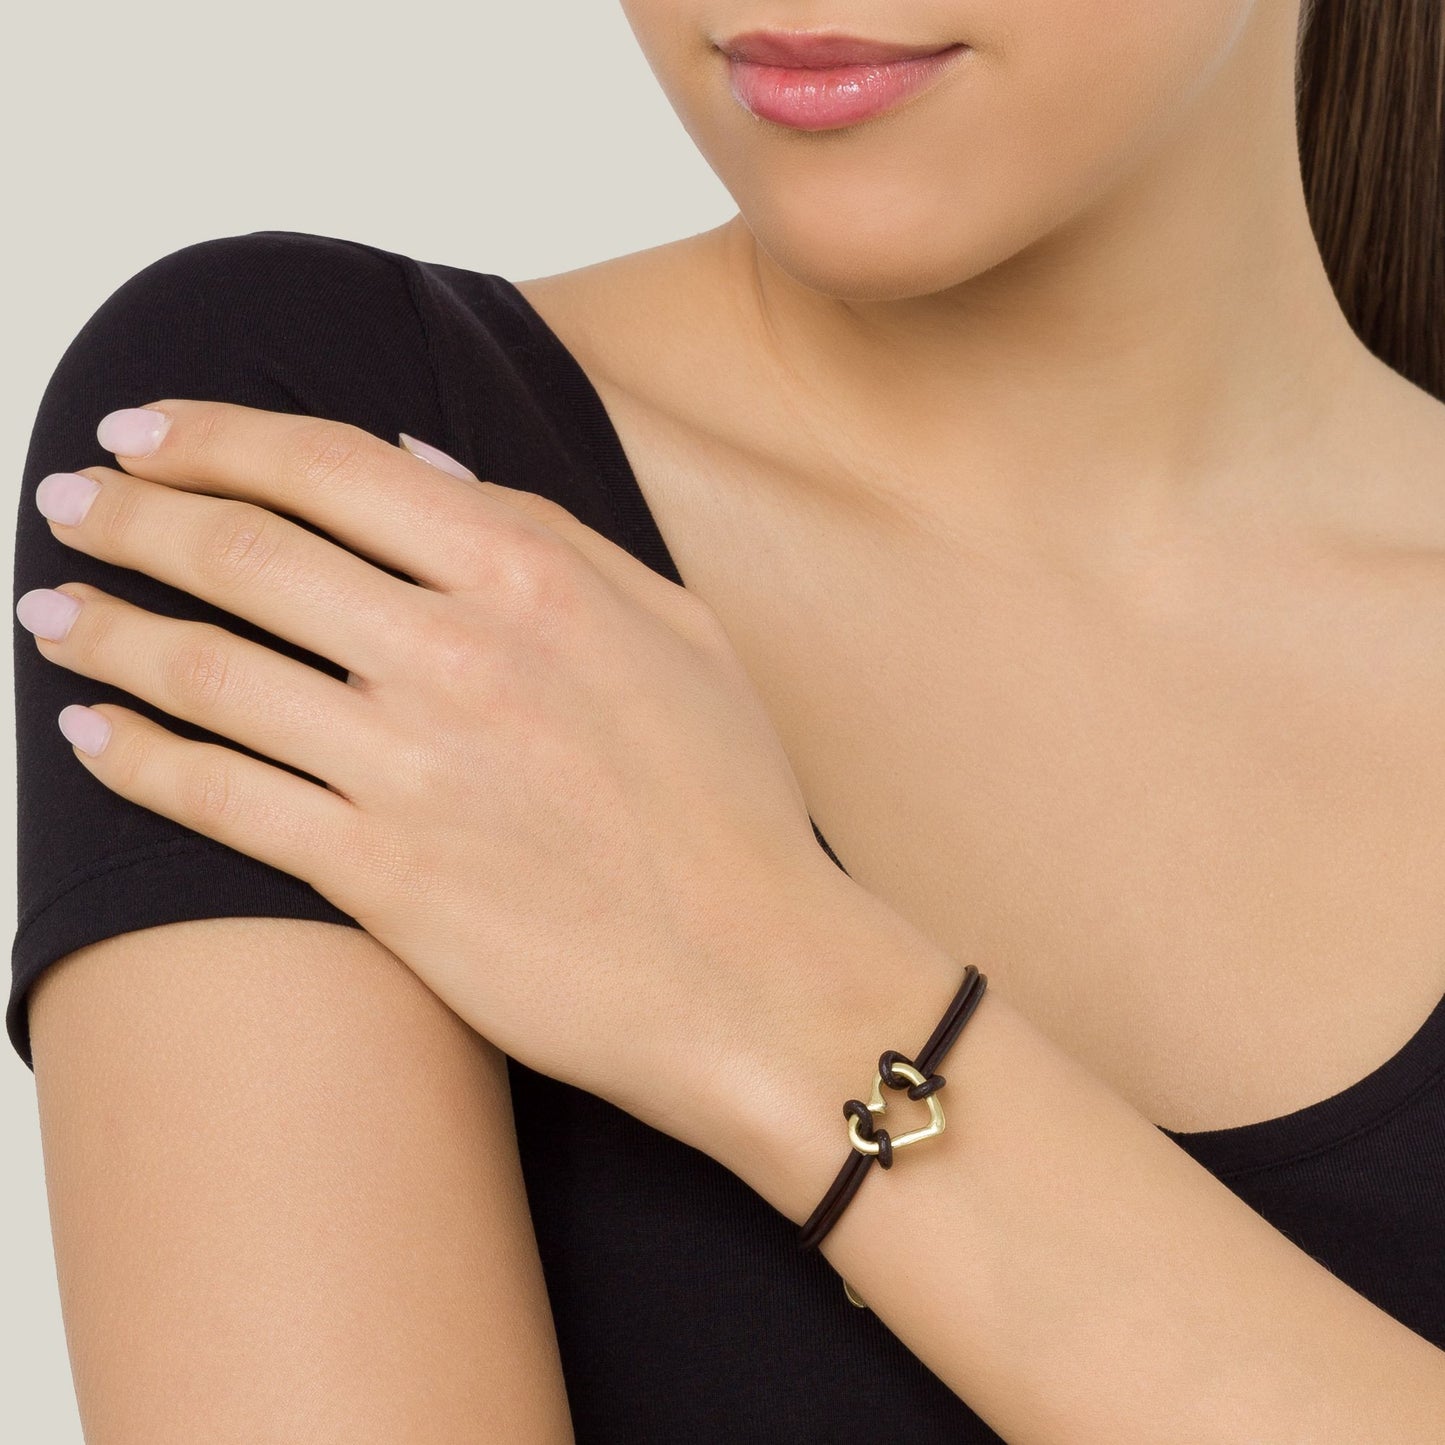 Golden brown leather heart bracelet "Myheart"